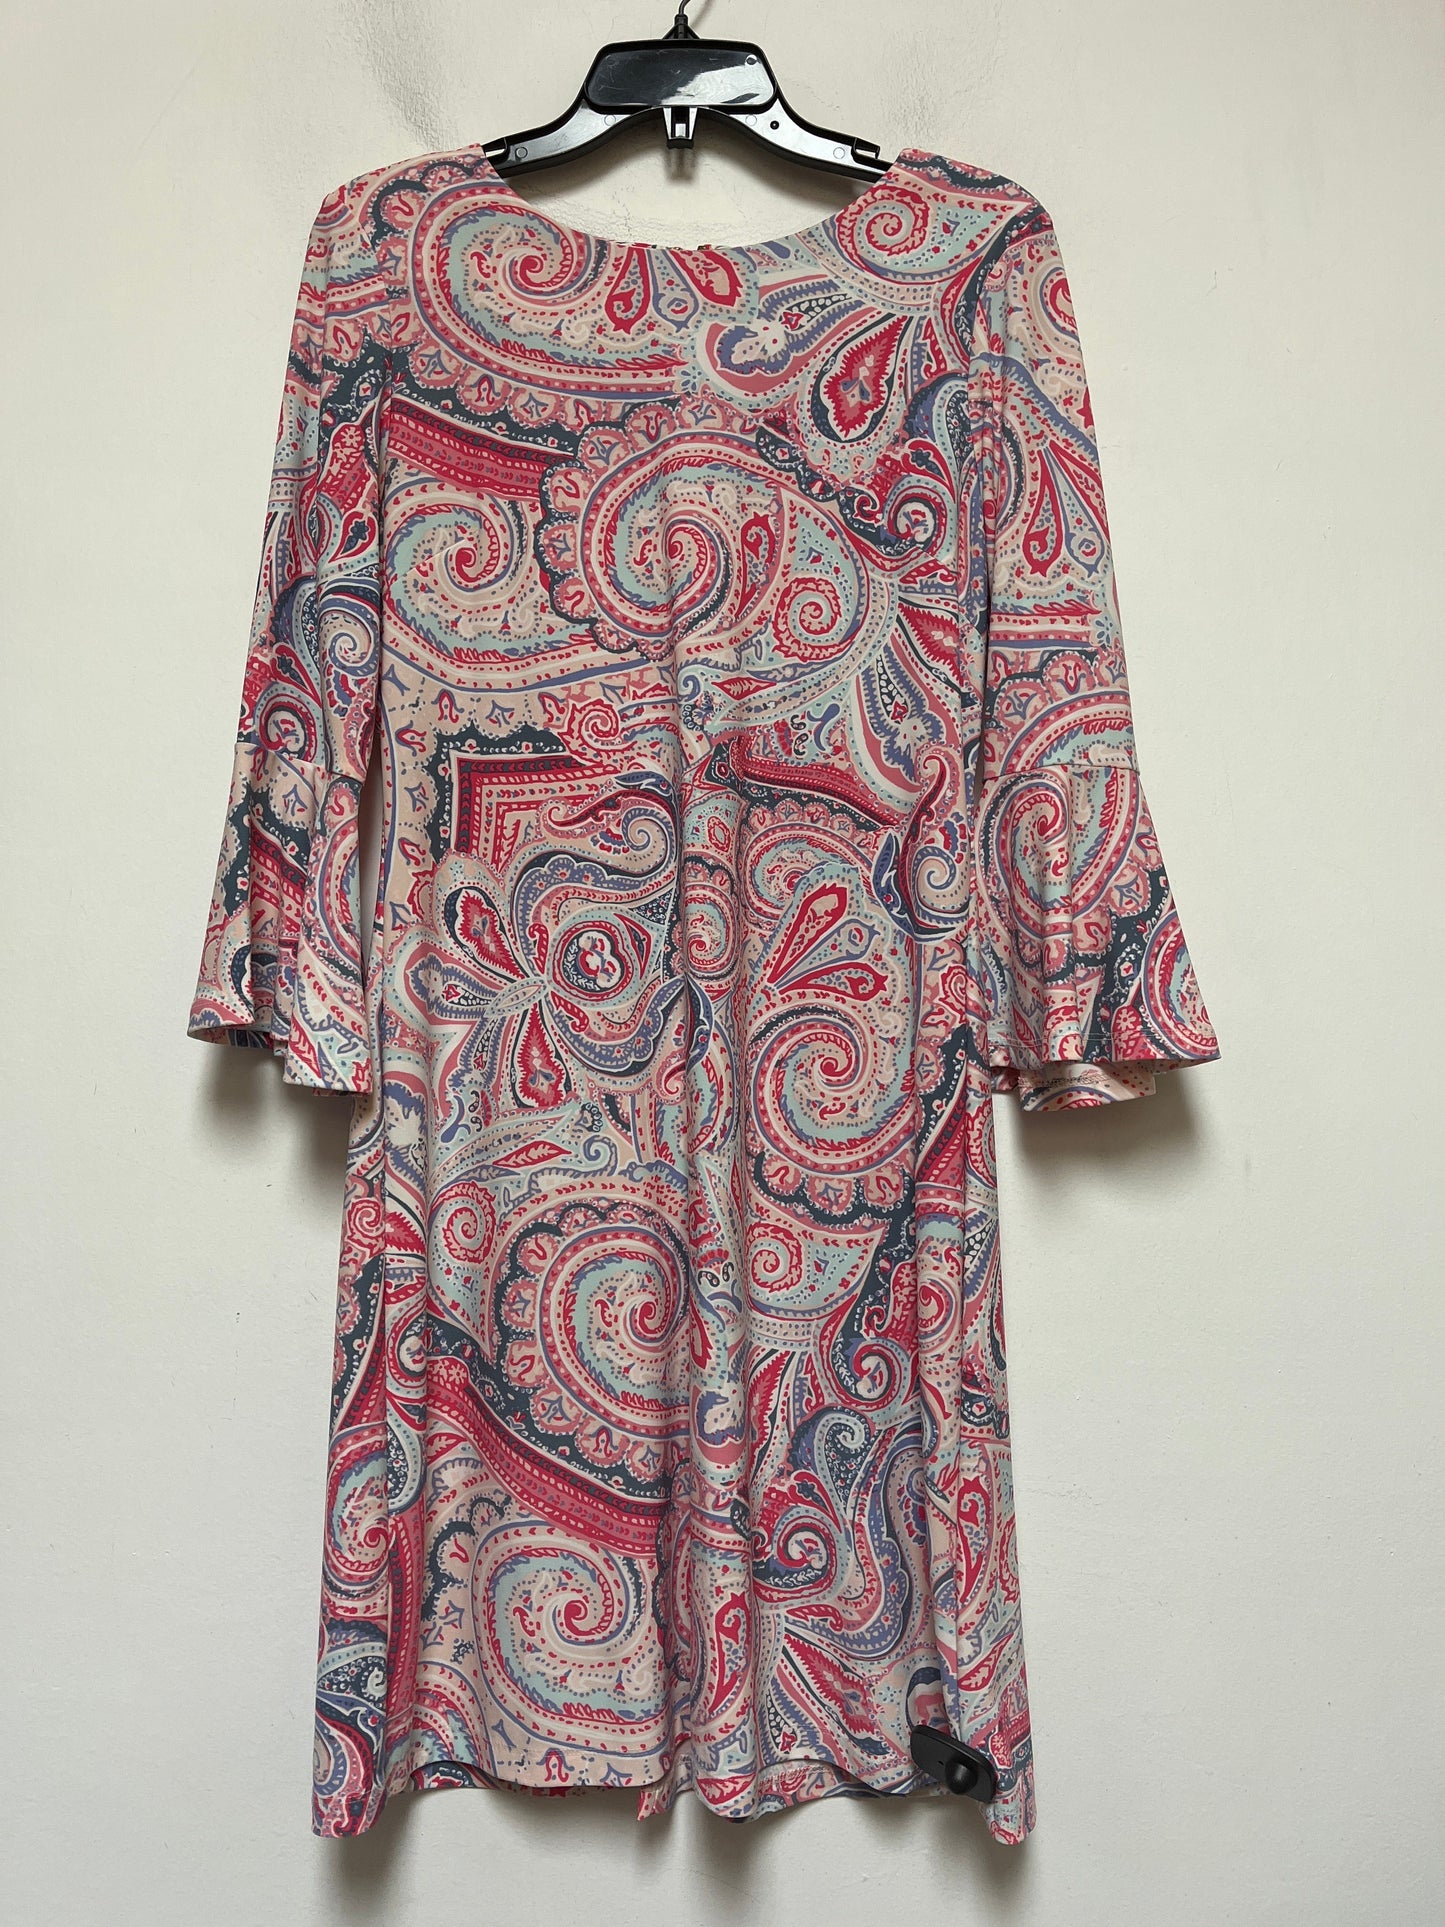 Paisley Print Dress Casual Short Tommy Hilfiger, Size 8